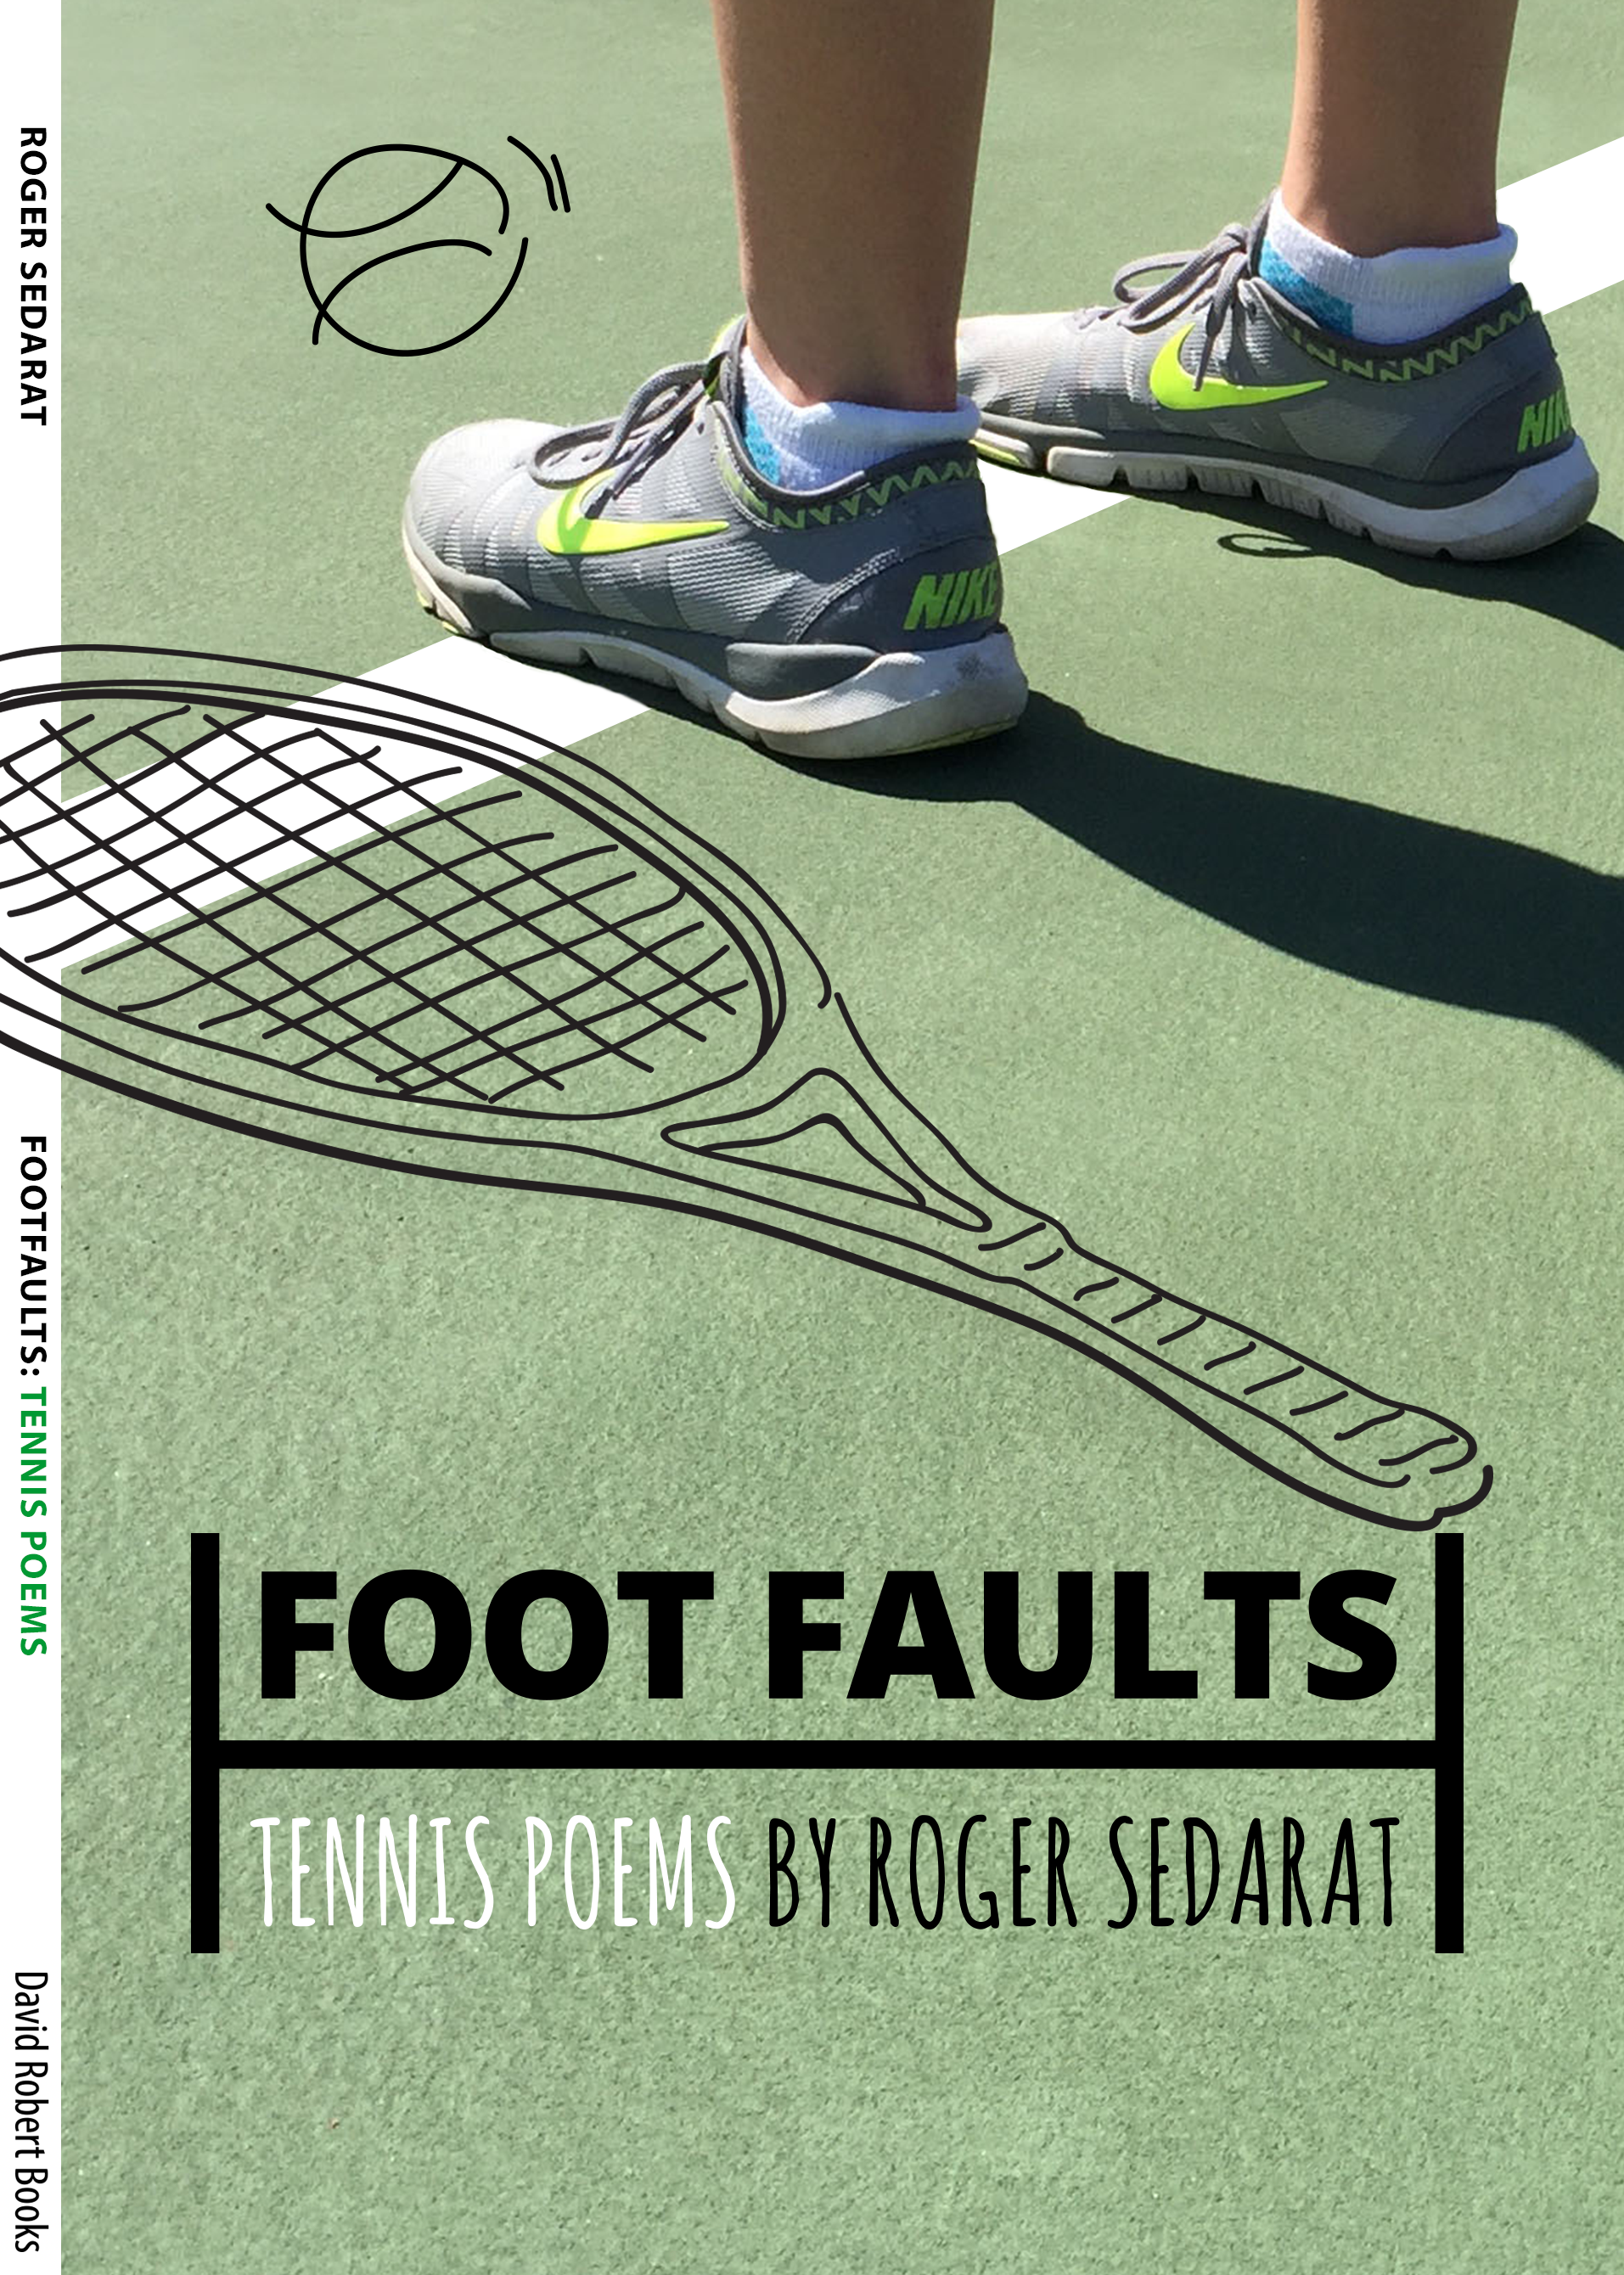 Foot Faults: Tennis Poems by Roger Sedarat